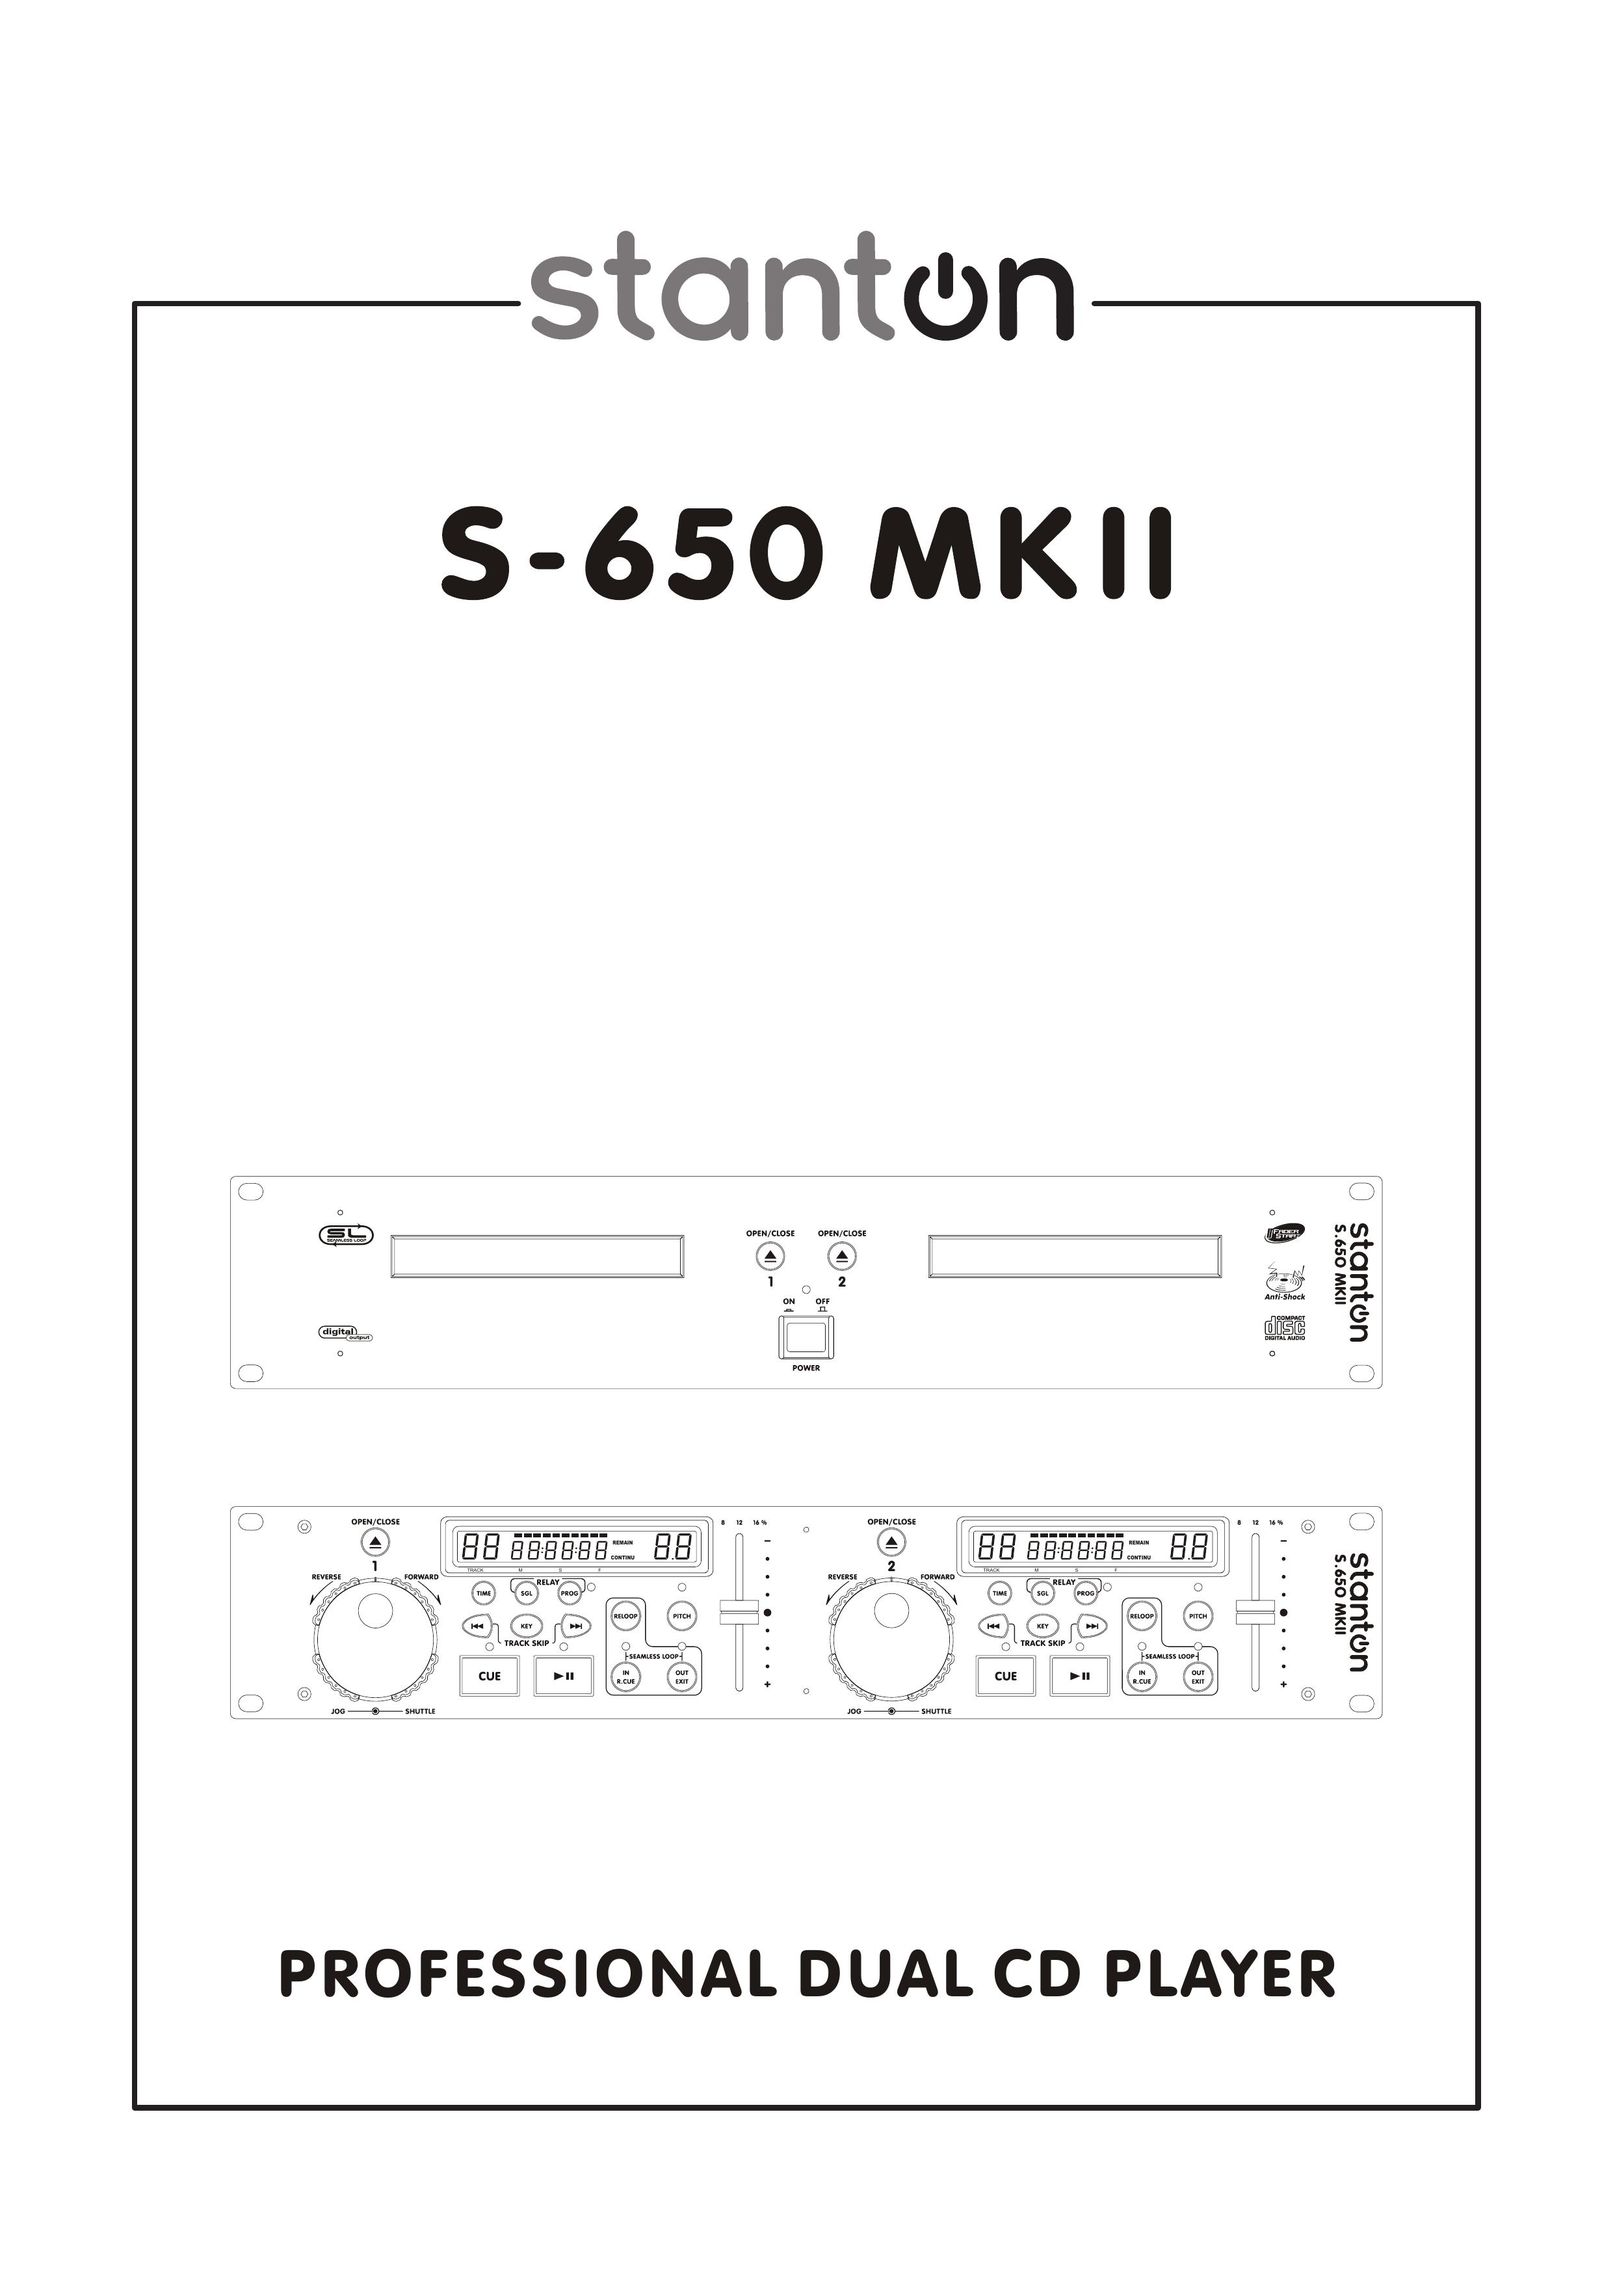 Stanton S-650 MK II CD Player User Manual